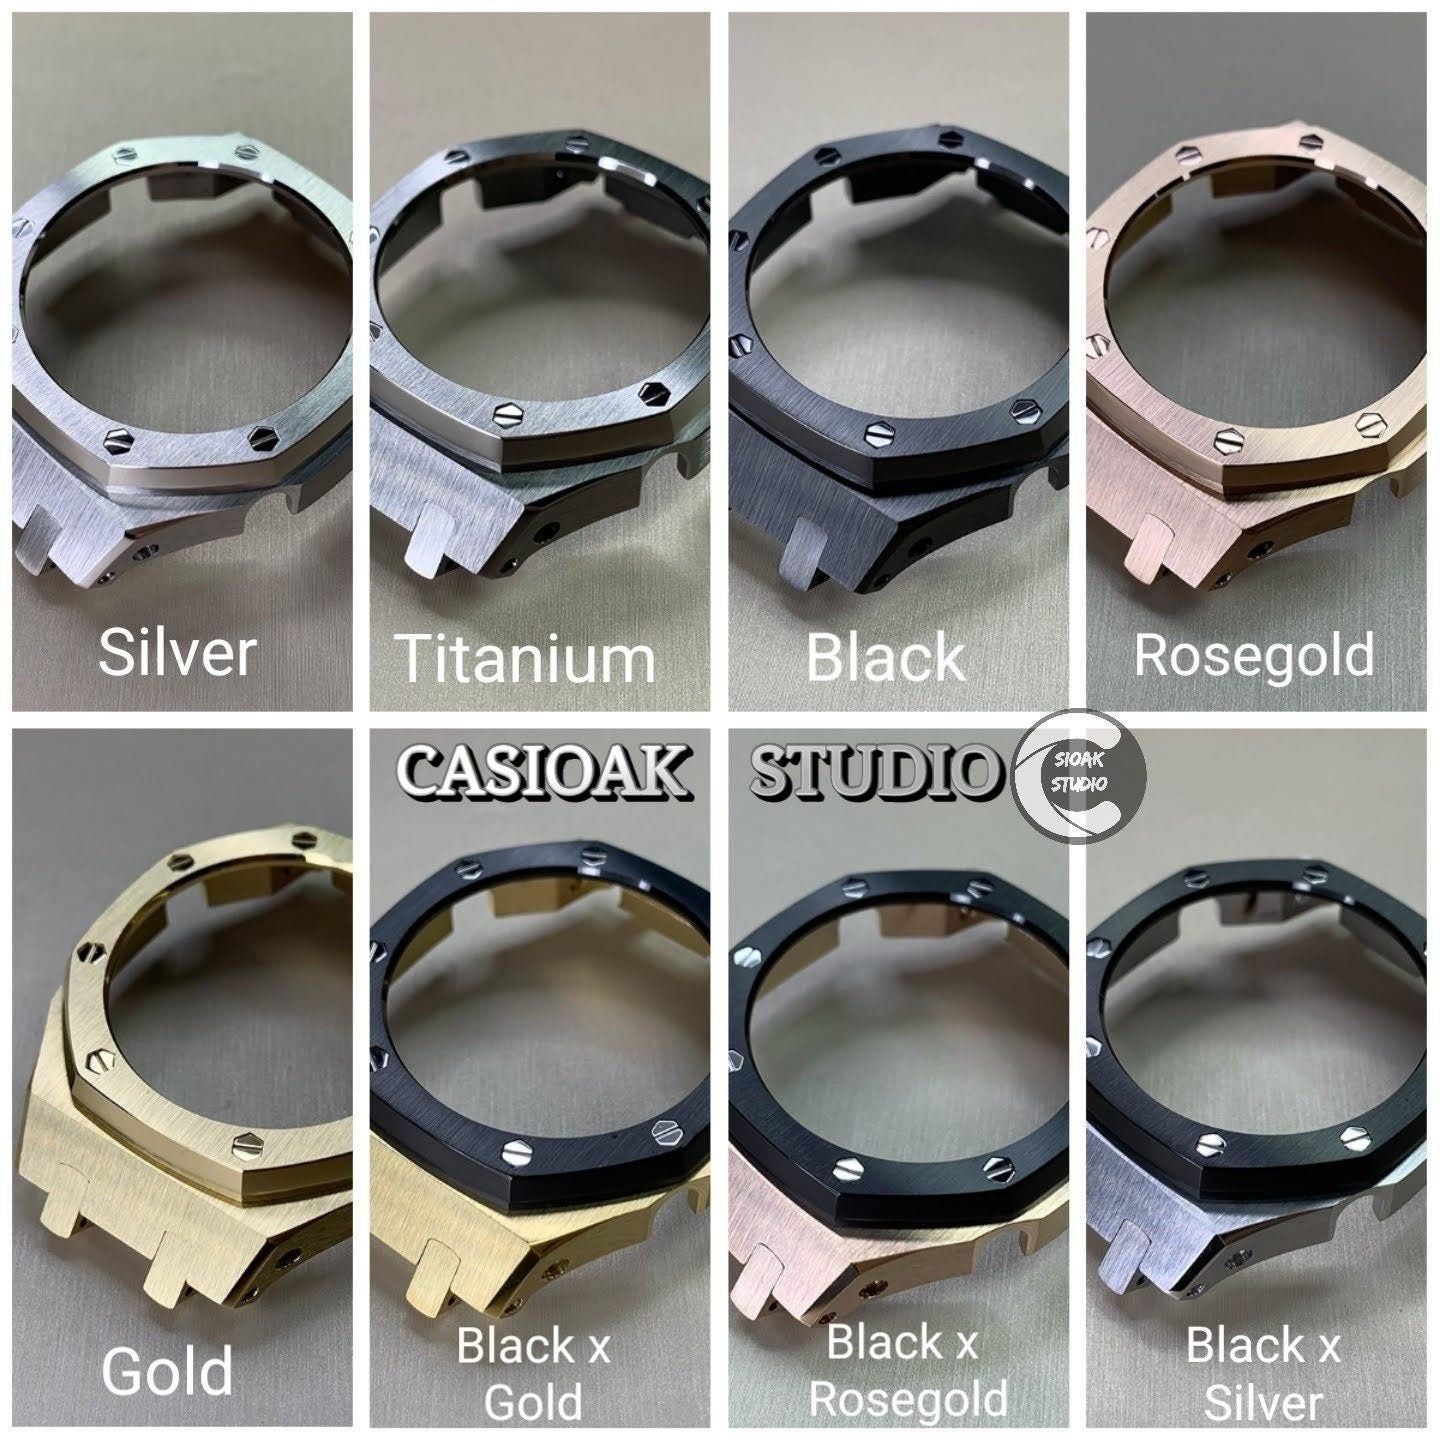 Casioak Mod Watch Gray Case White Rubber Strap Black Rose Gold Time Mark Black Dial 42mm - Casioak Studio